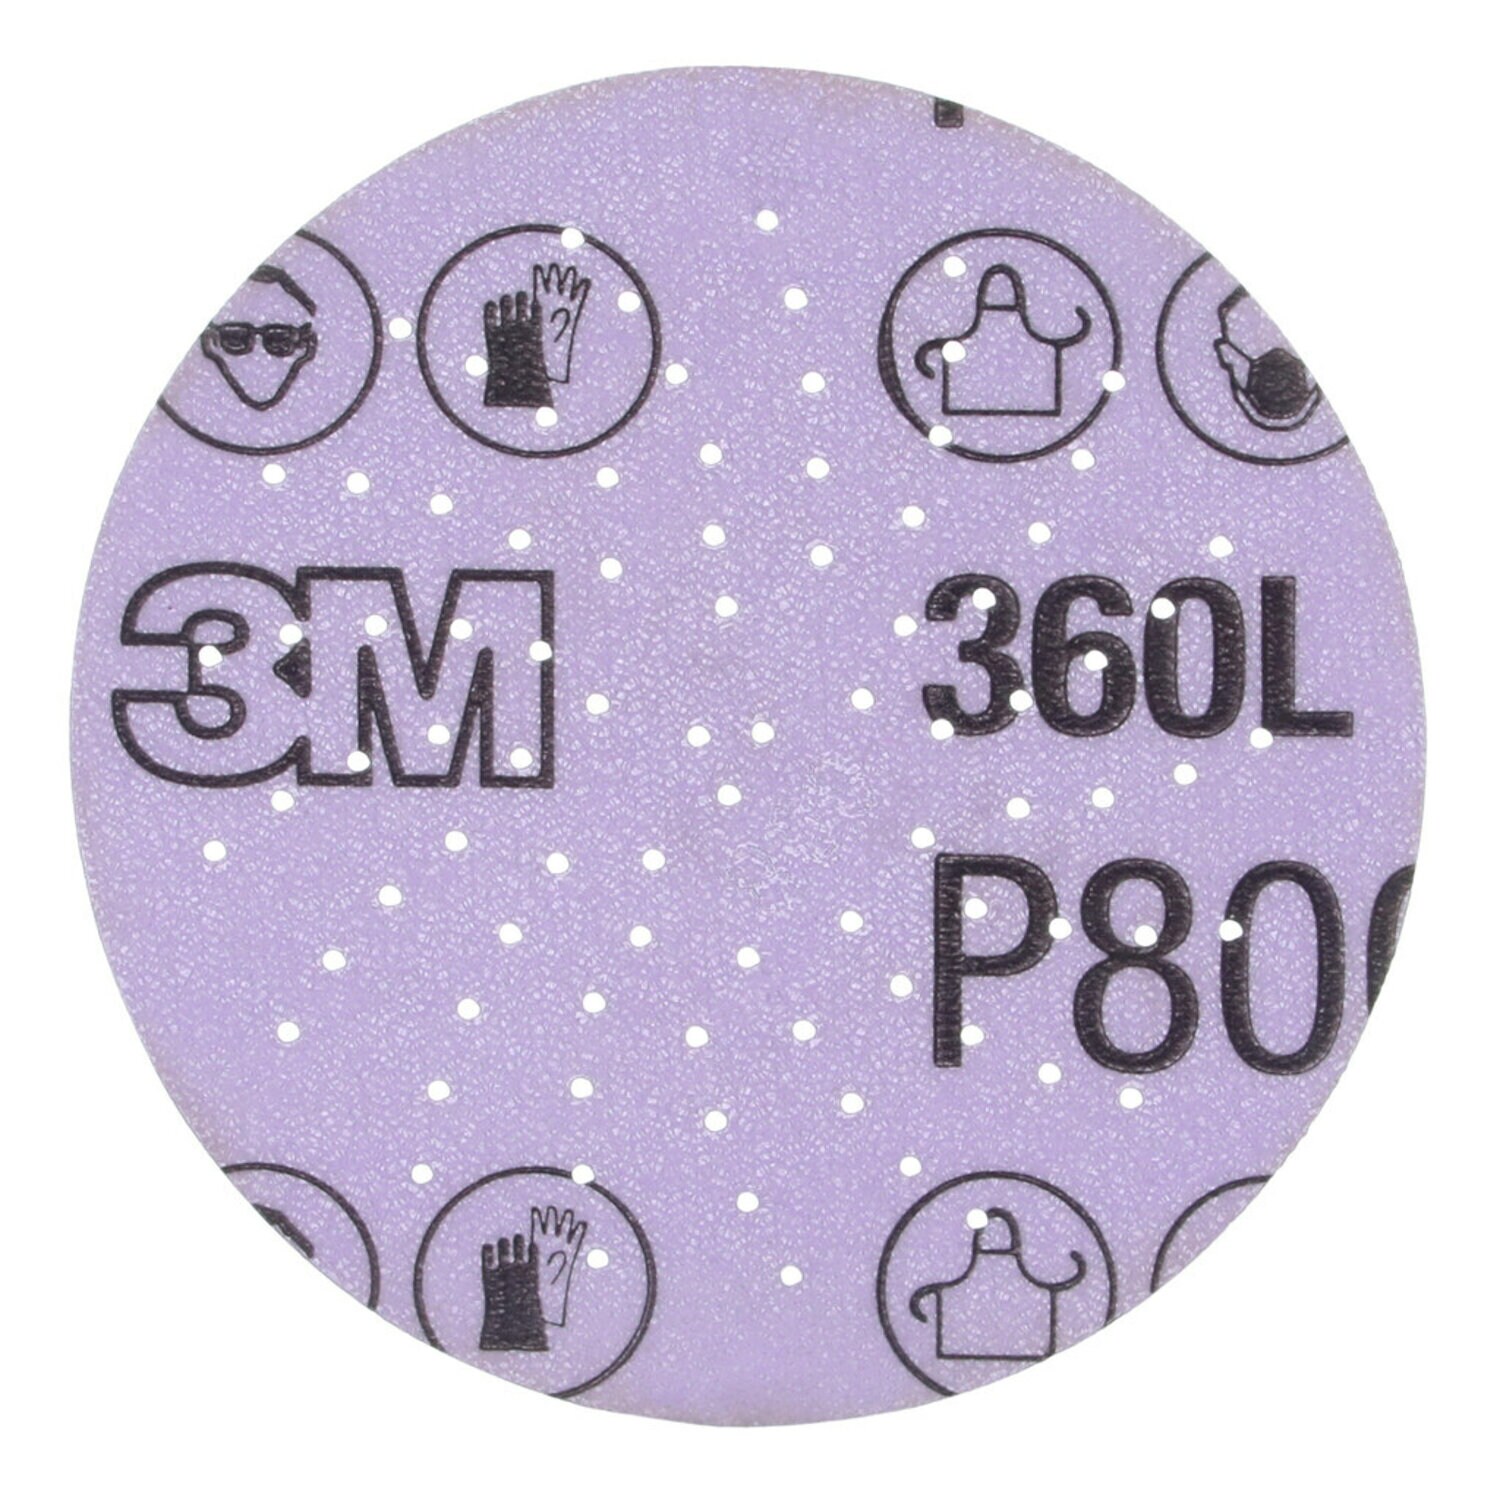 7100010262 - 3M Xtract Film Disc 360L, P800 3MIL, 3 in, Die 300LG, 100/Carton, 500
ea/Case